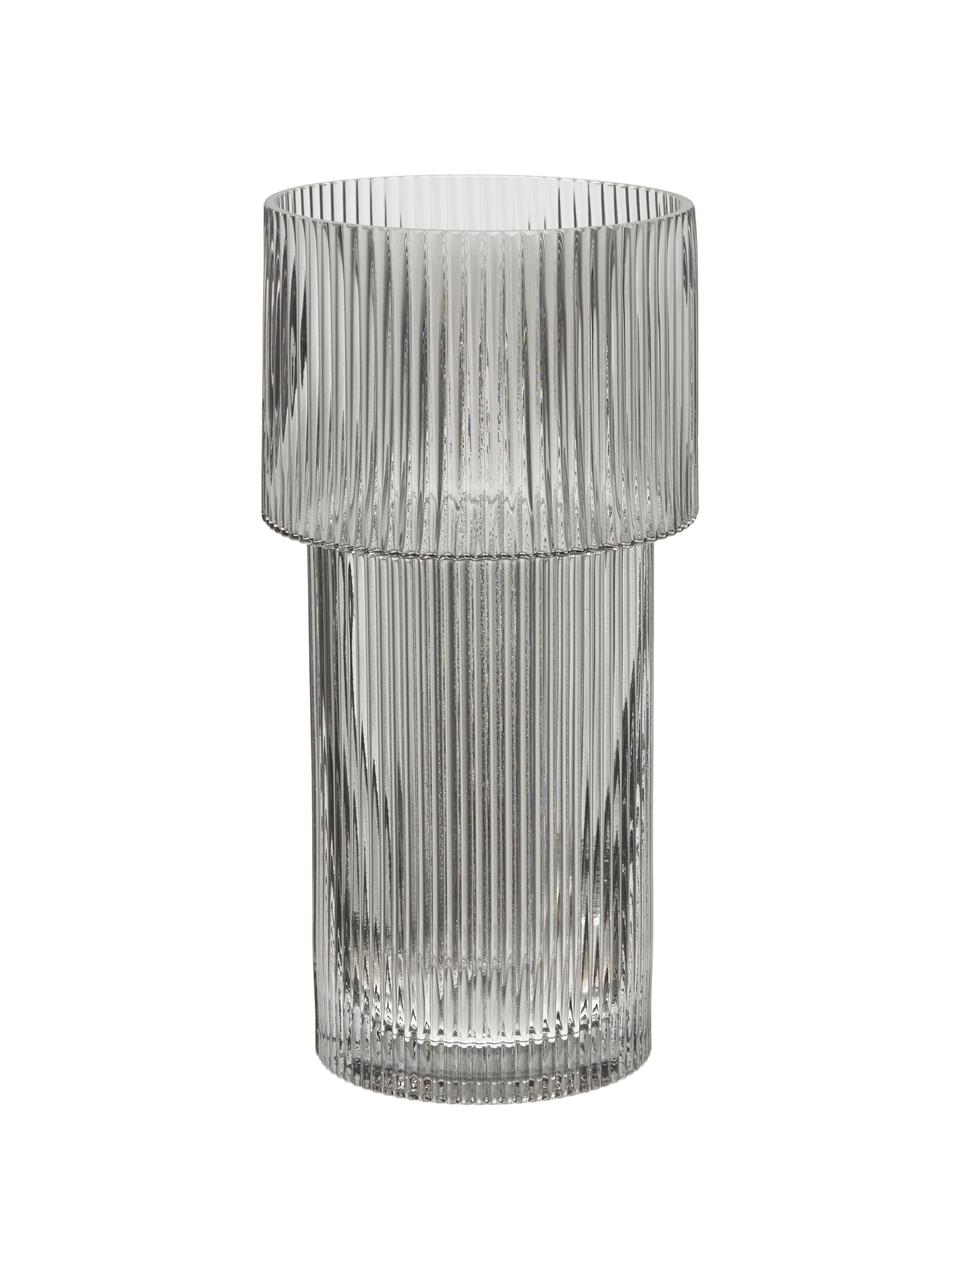 Vaso in vetro rigato grigio Lija, Vetro, Grigio trasparente, Ø 14 x Alt. 30 cm